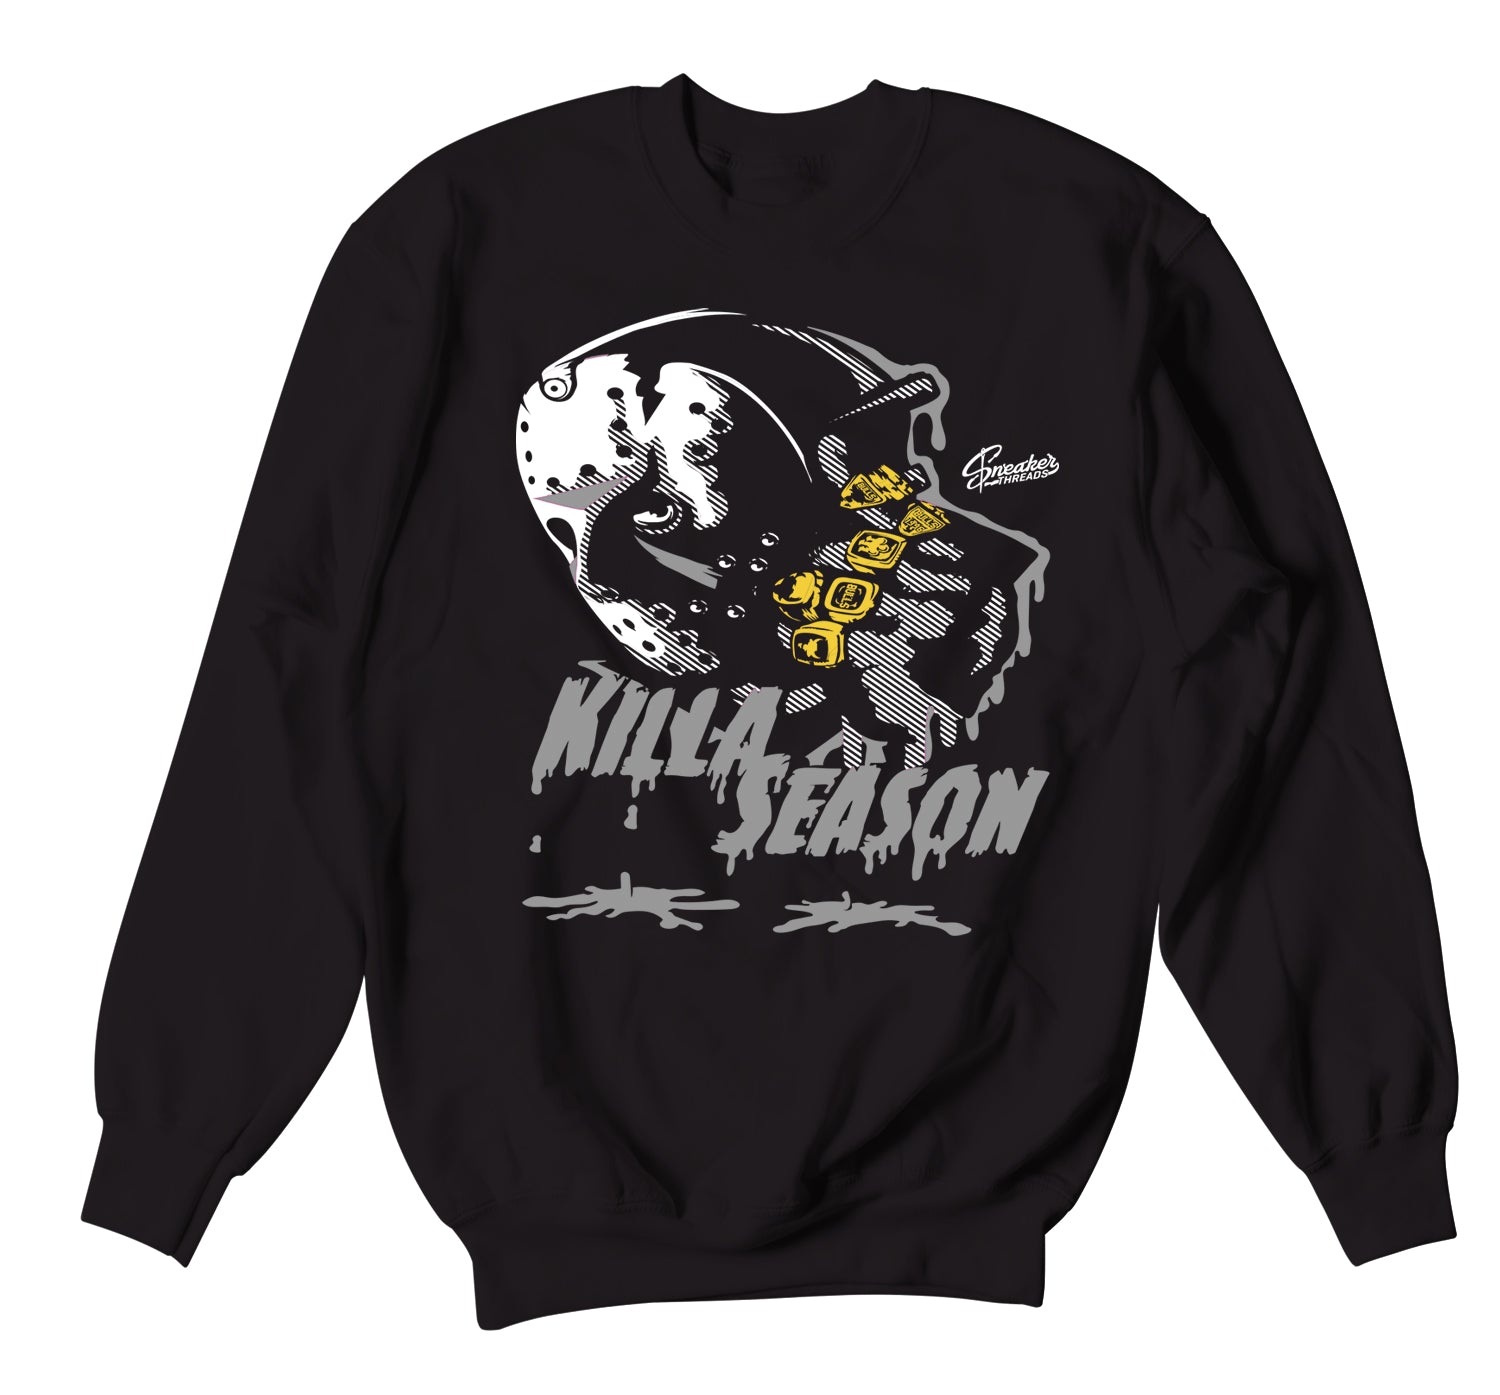 Retro 11 Cool Grey Sweater - Killa Season- Black